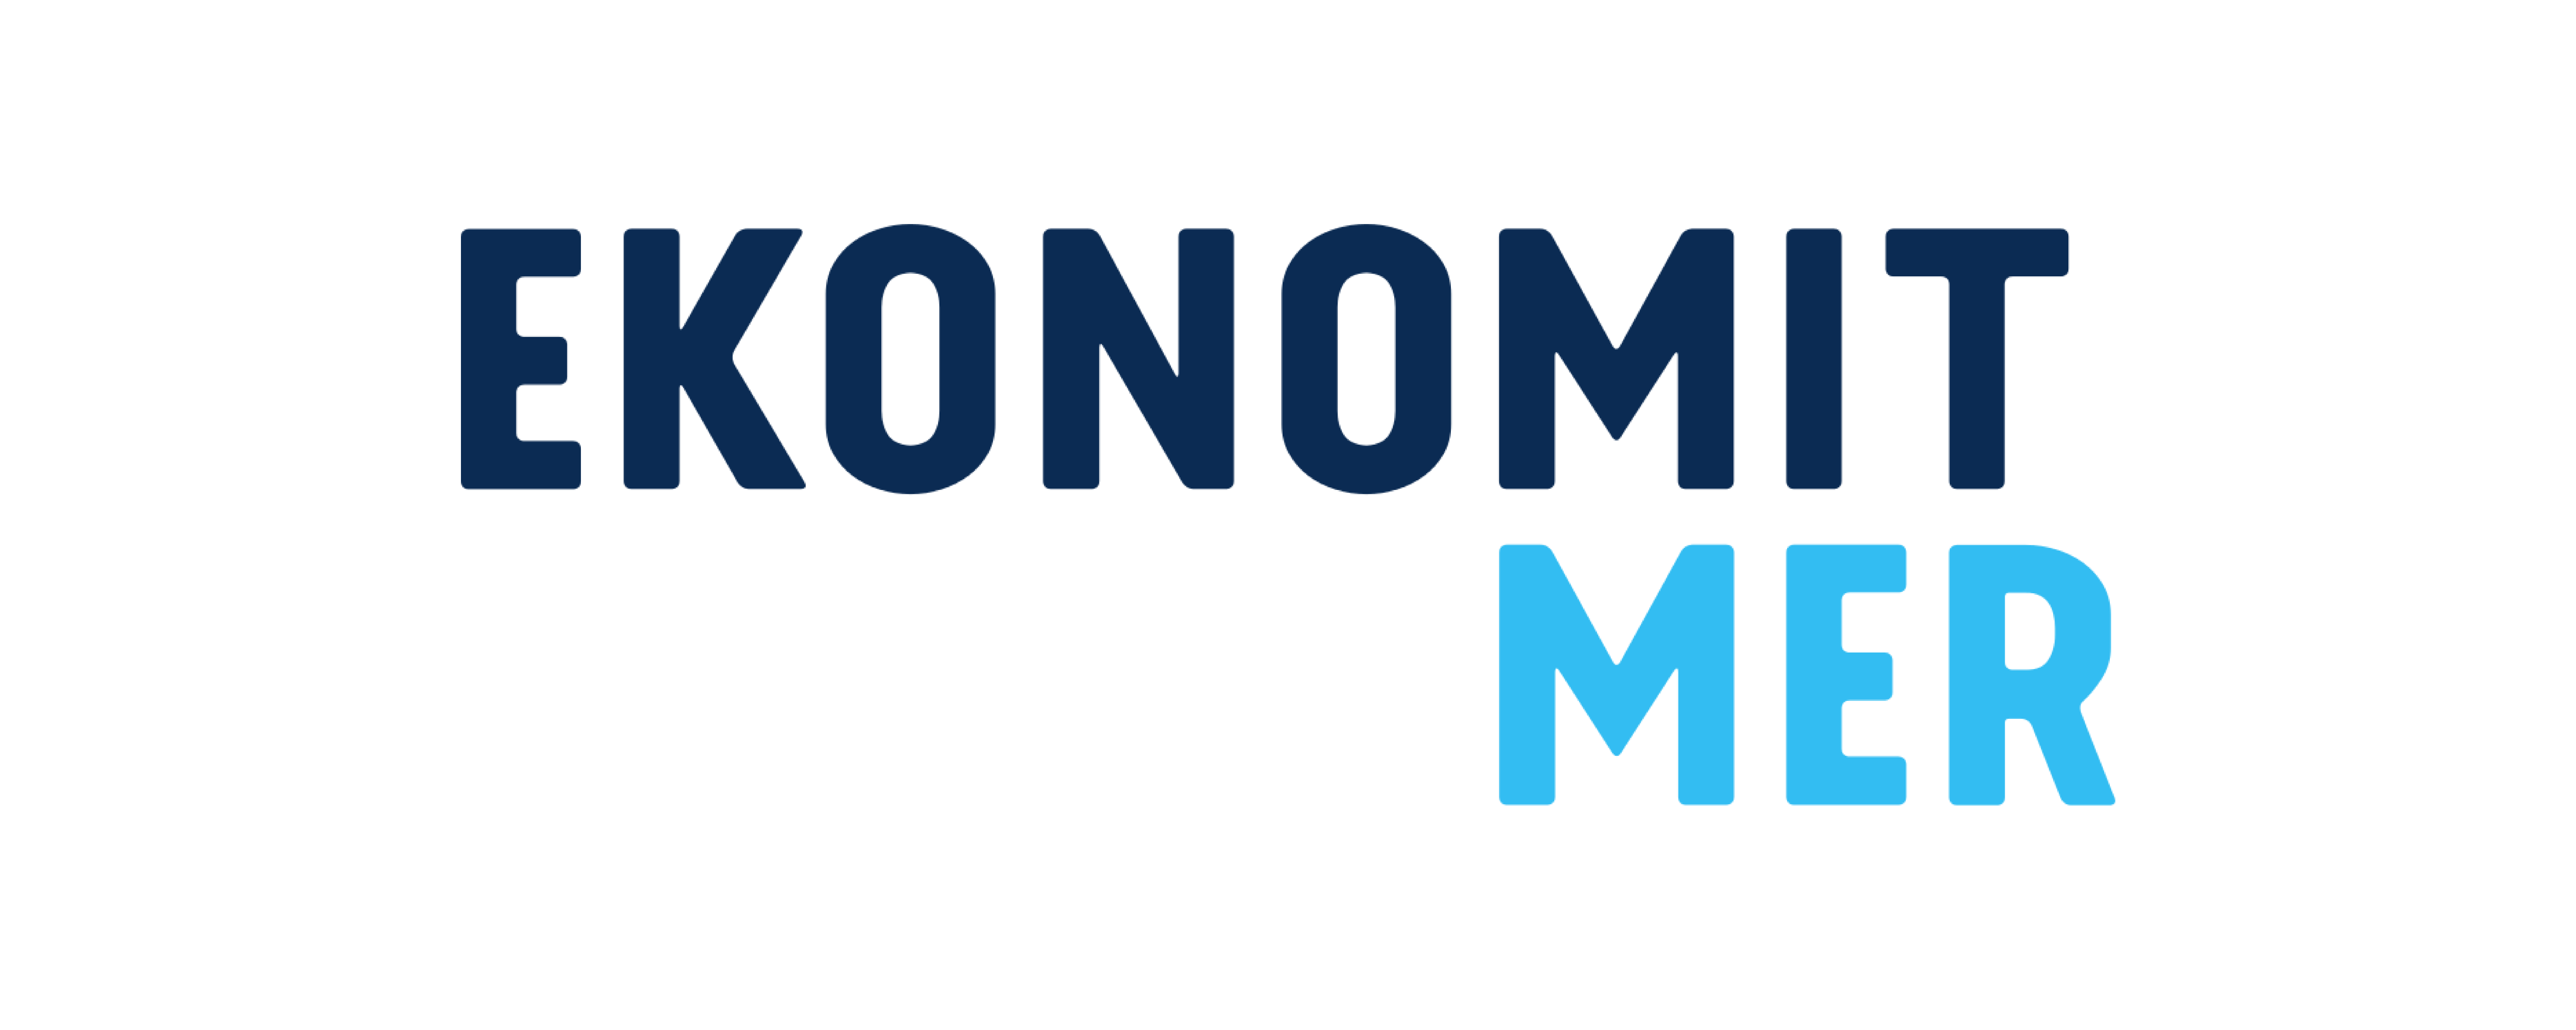 ekonomitmer-getjenny-logo